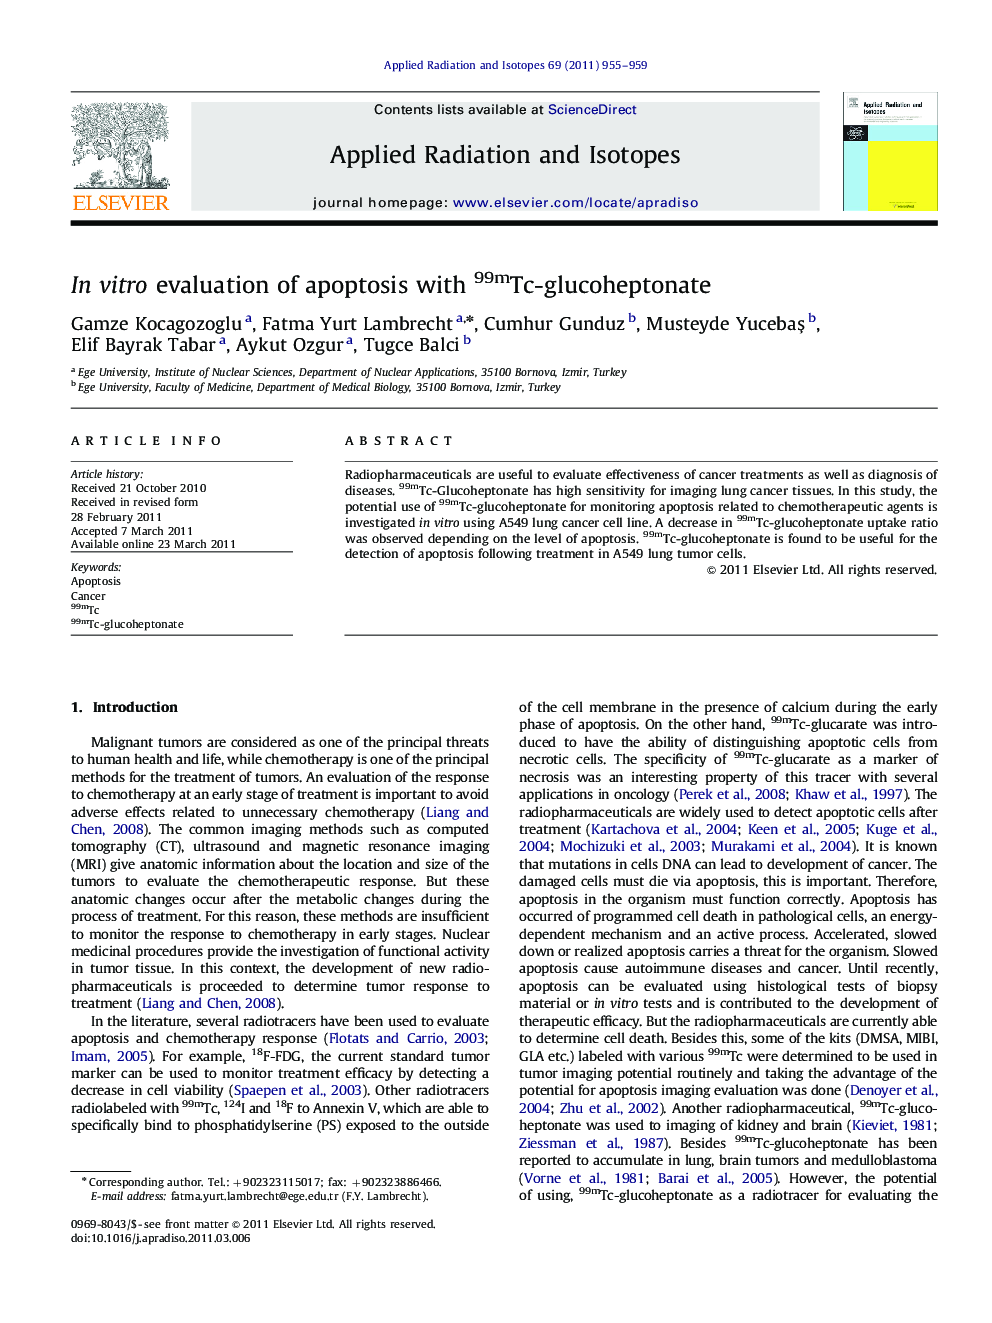 In vitro evaluation of apoptosis with 99mTc-glucoheptonate